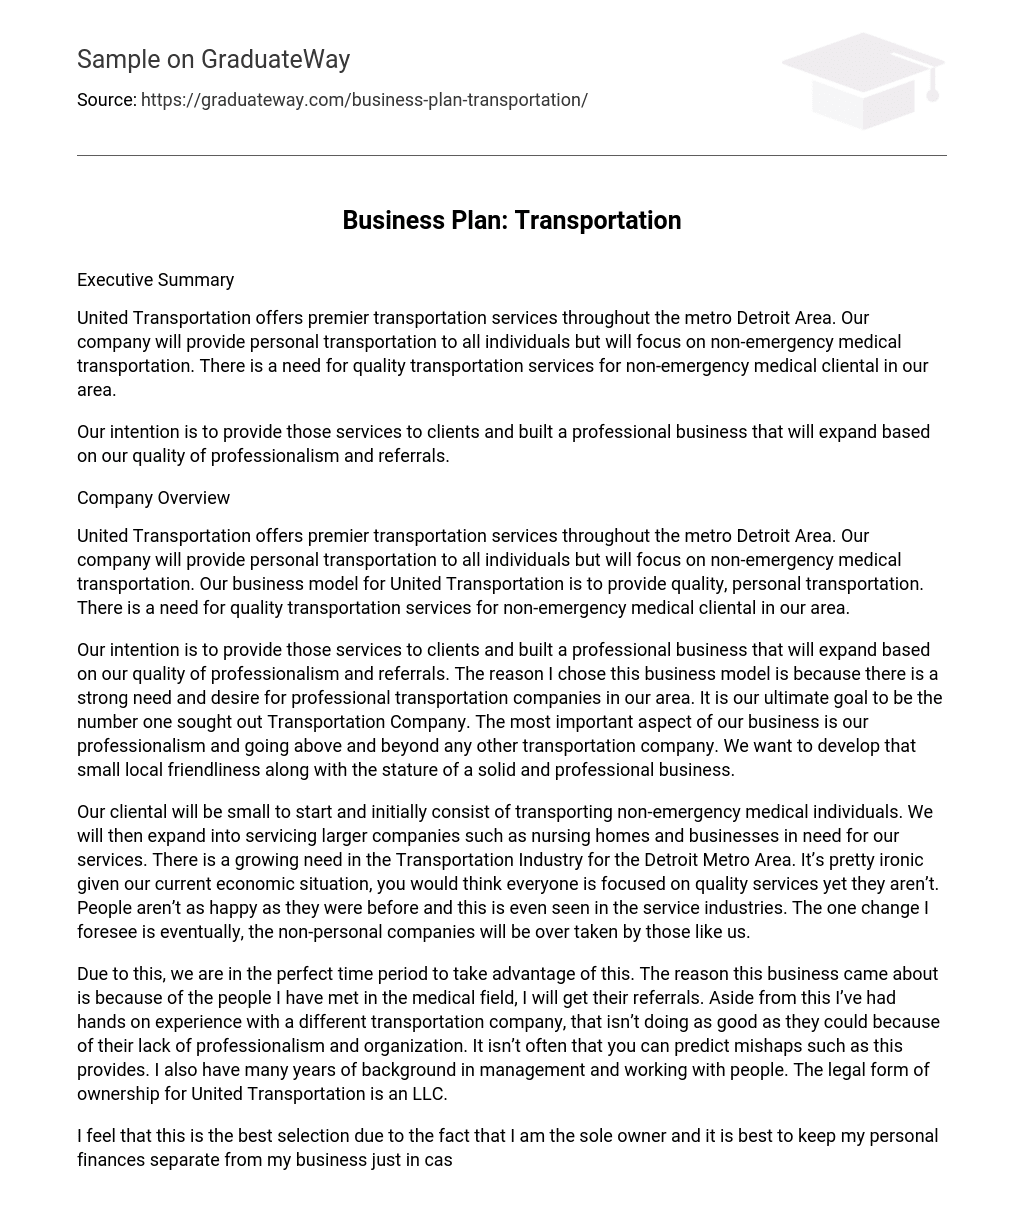 Business Plan: Transportation